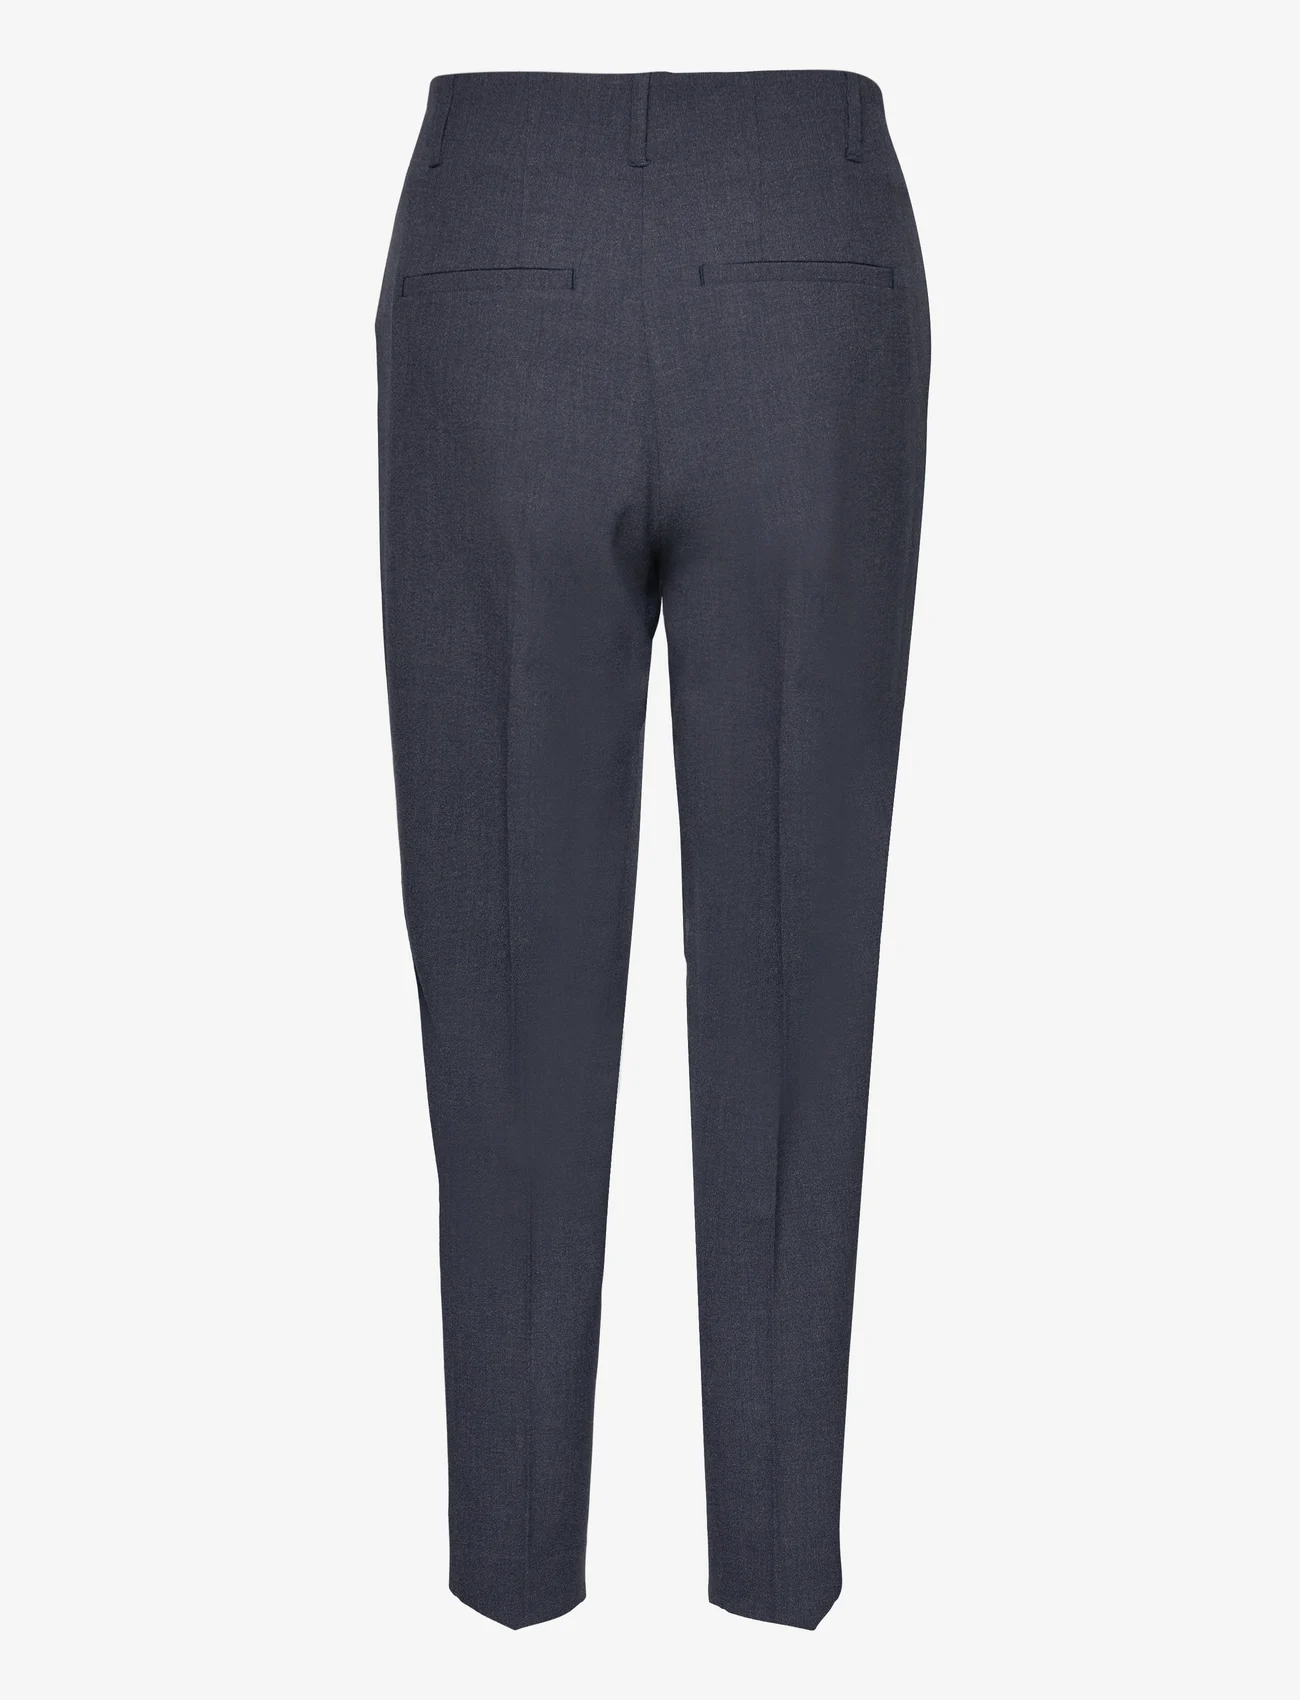 FIVEUNITS - Julia - slim fit trousers - blue grey melange - 1